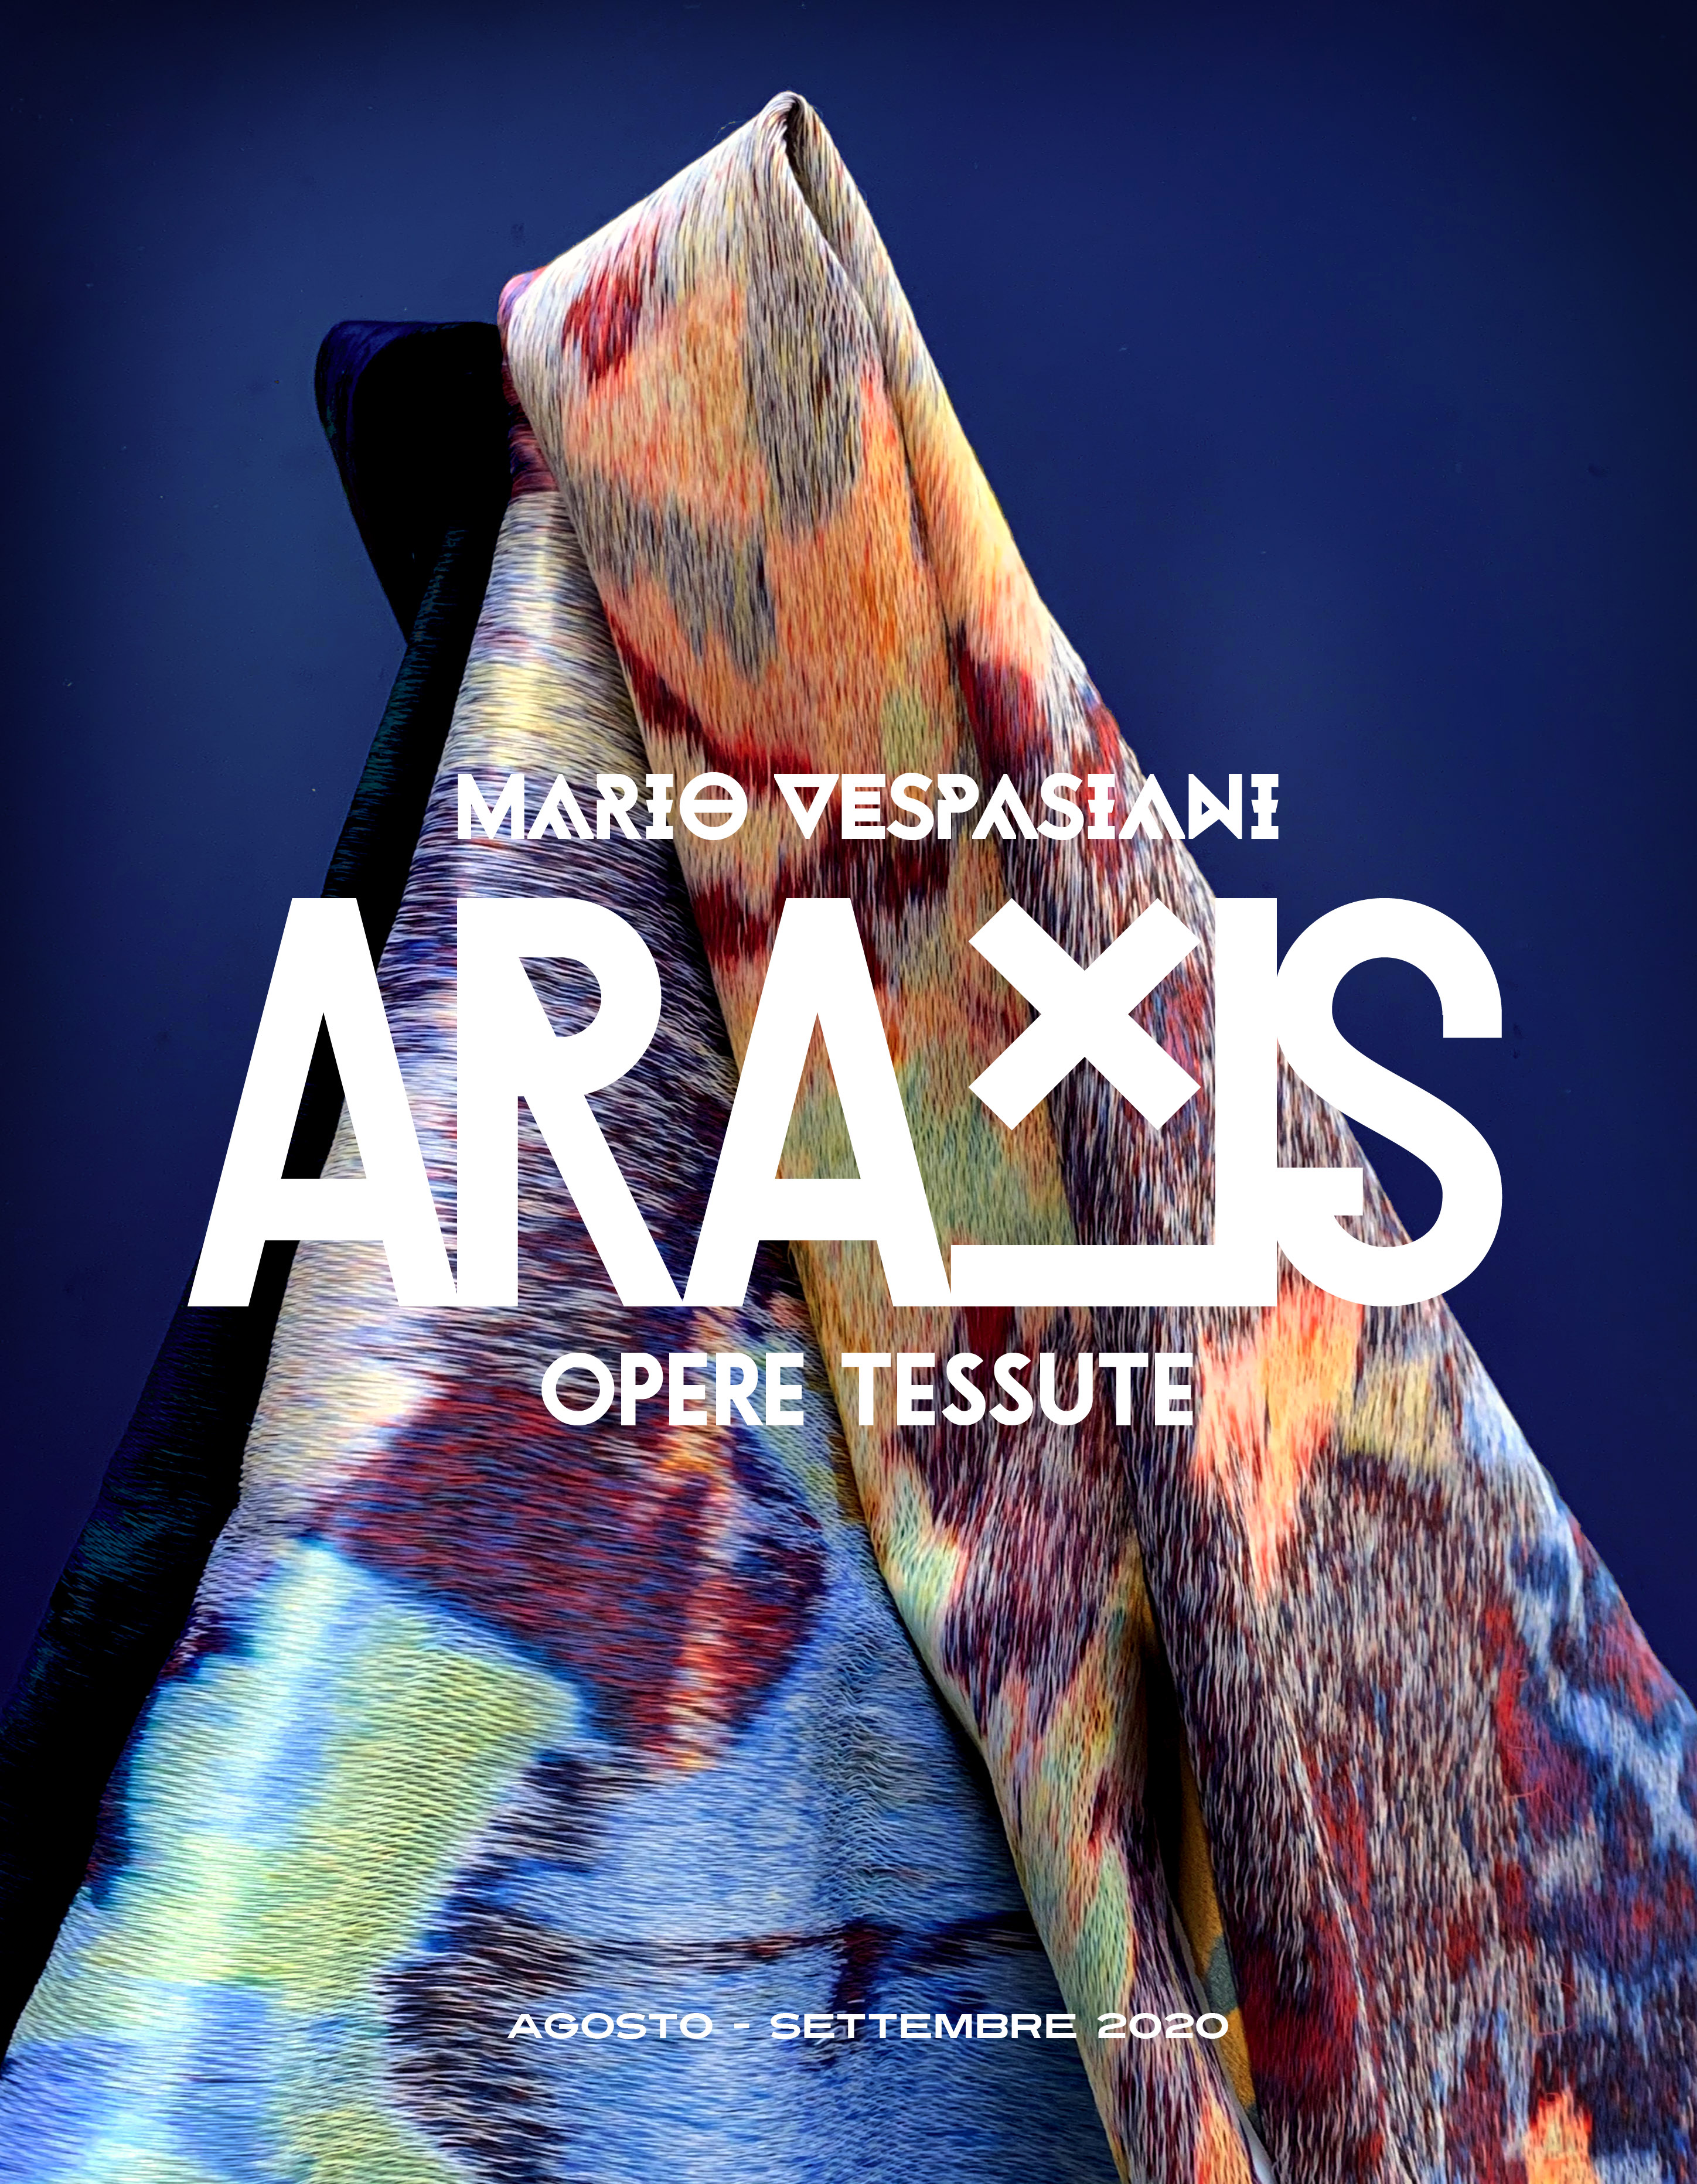 ARAXIS - Opere tessute